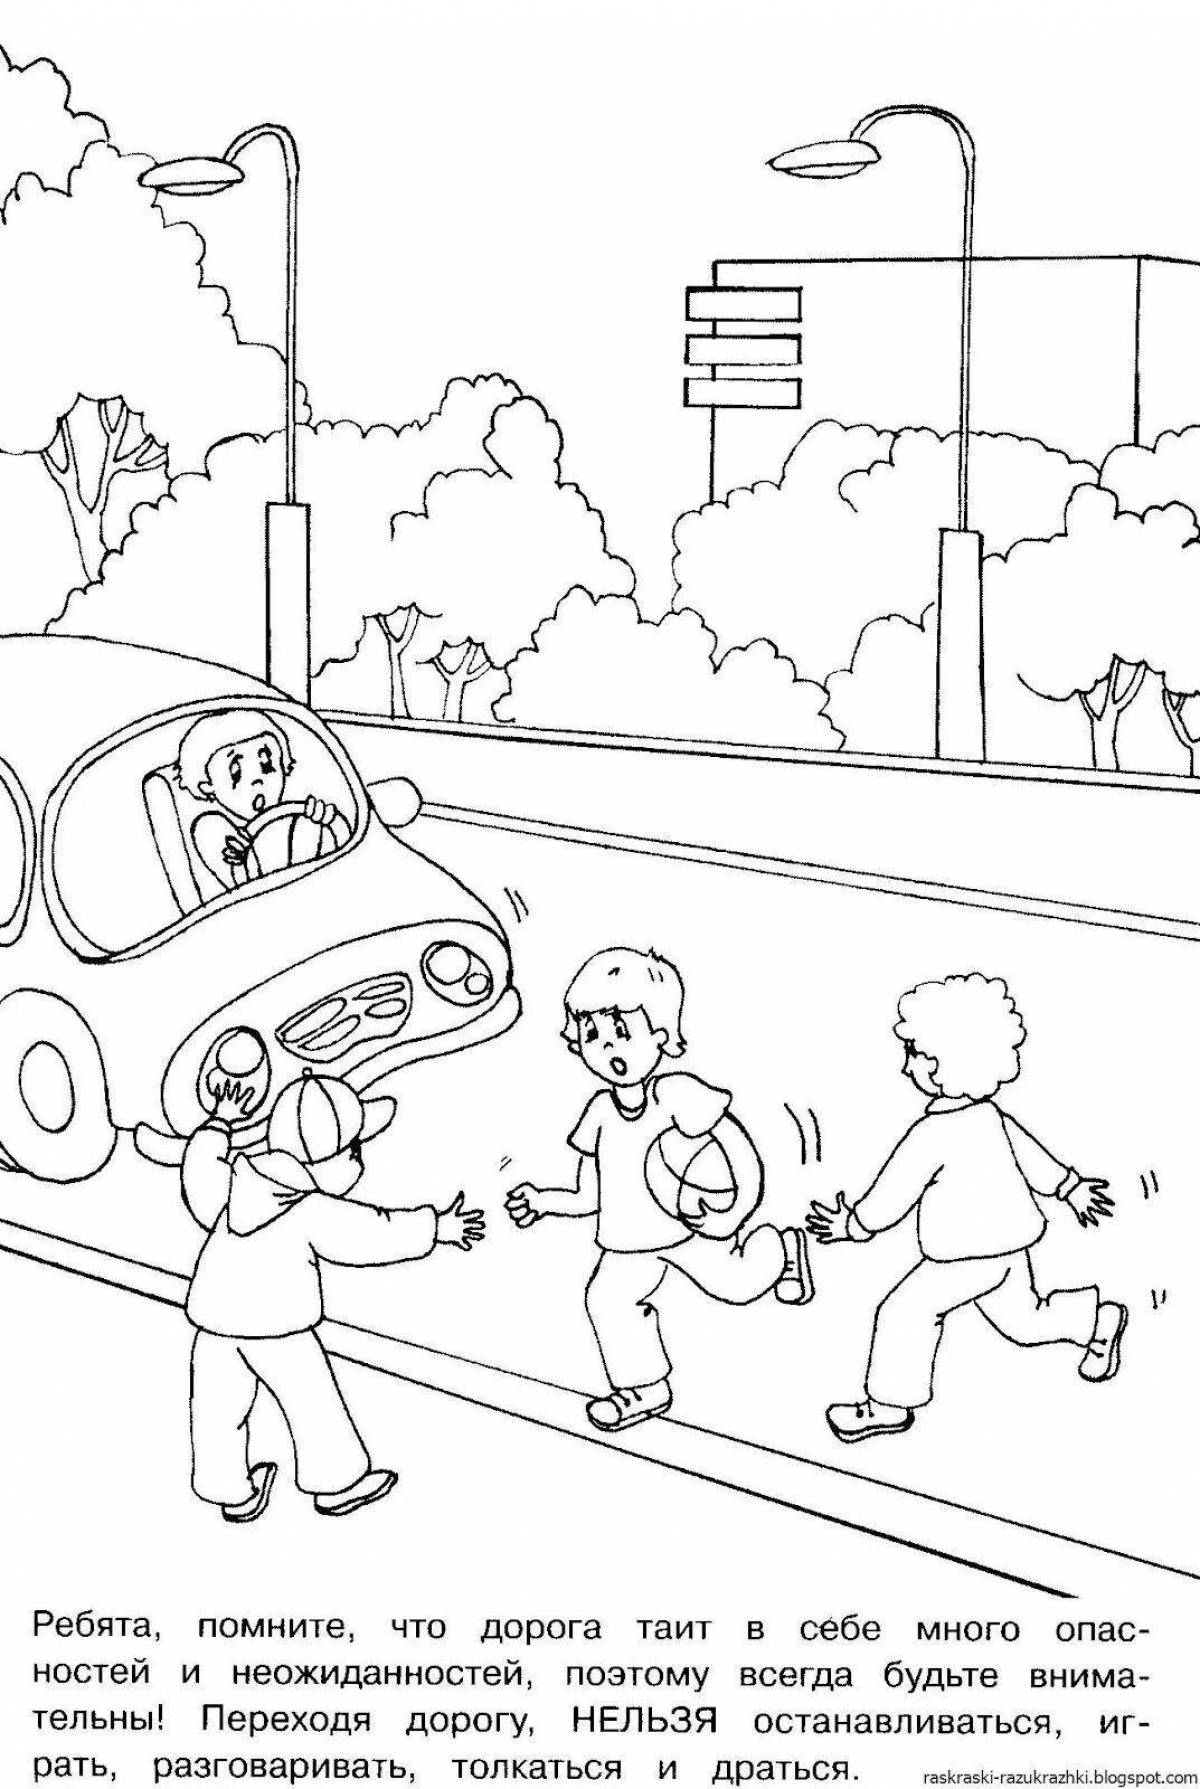 For children traffic rules for preschoolers #8